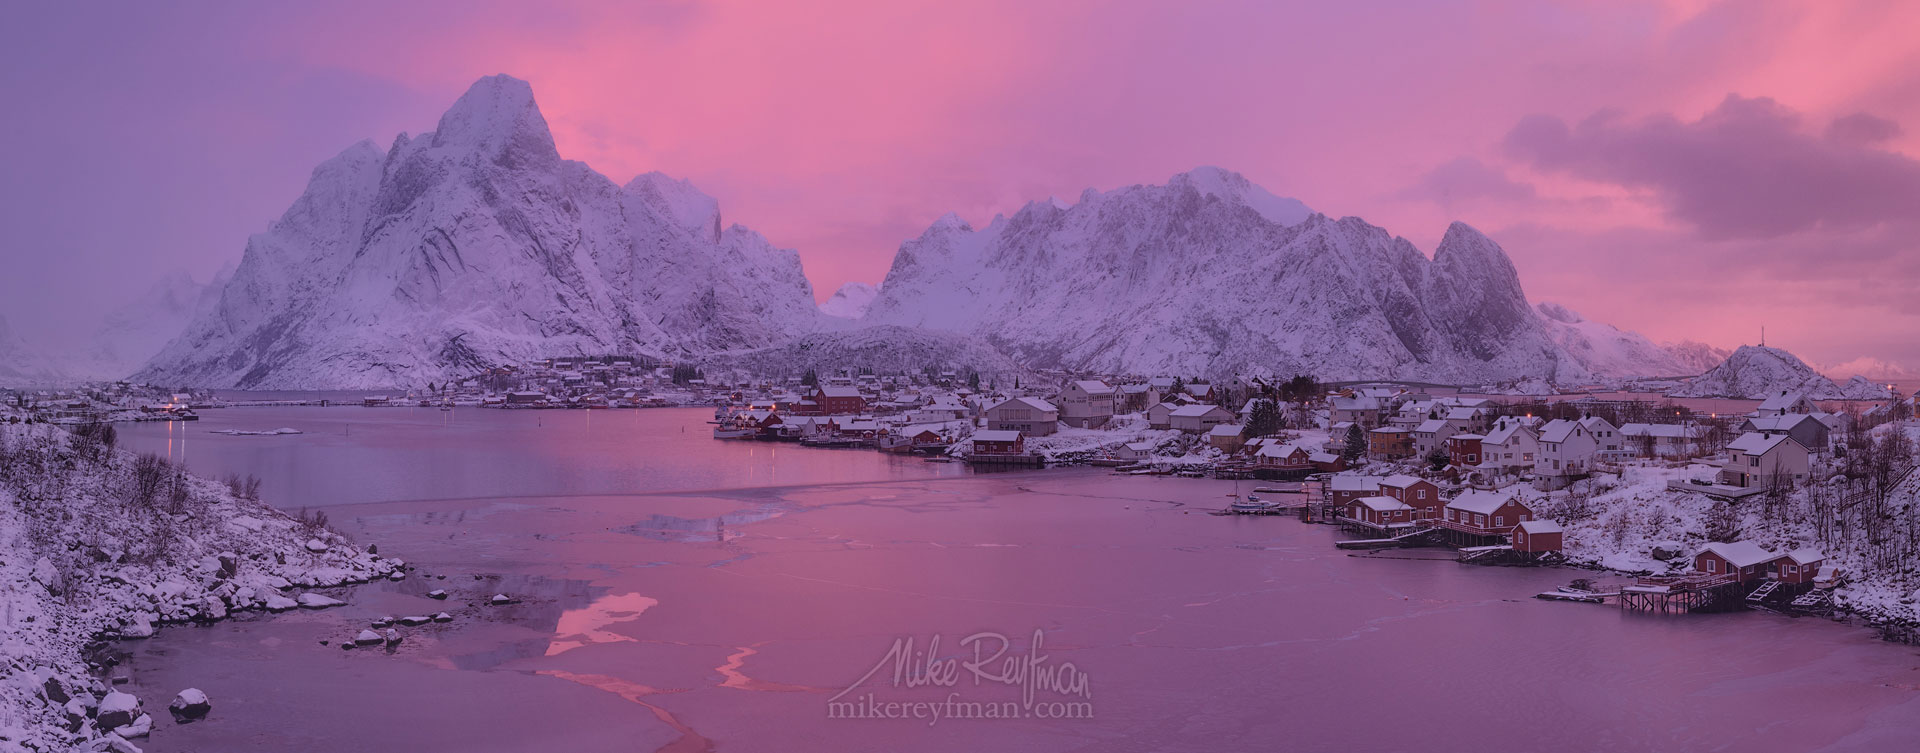 Arctic Morning. Panoramic view of Olstinden mountain peak and fishing village of Reine at sunrise. Moskenes, Lofoten archipelago, Norway. LF-MRD1E0840-46_Pano-2.55x1 - Lofoten Archipelago in Winter, Arctic Norway - Mike Reyfman Photography